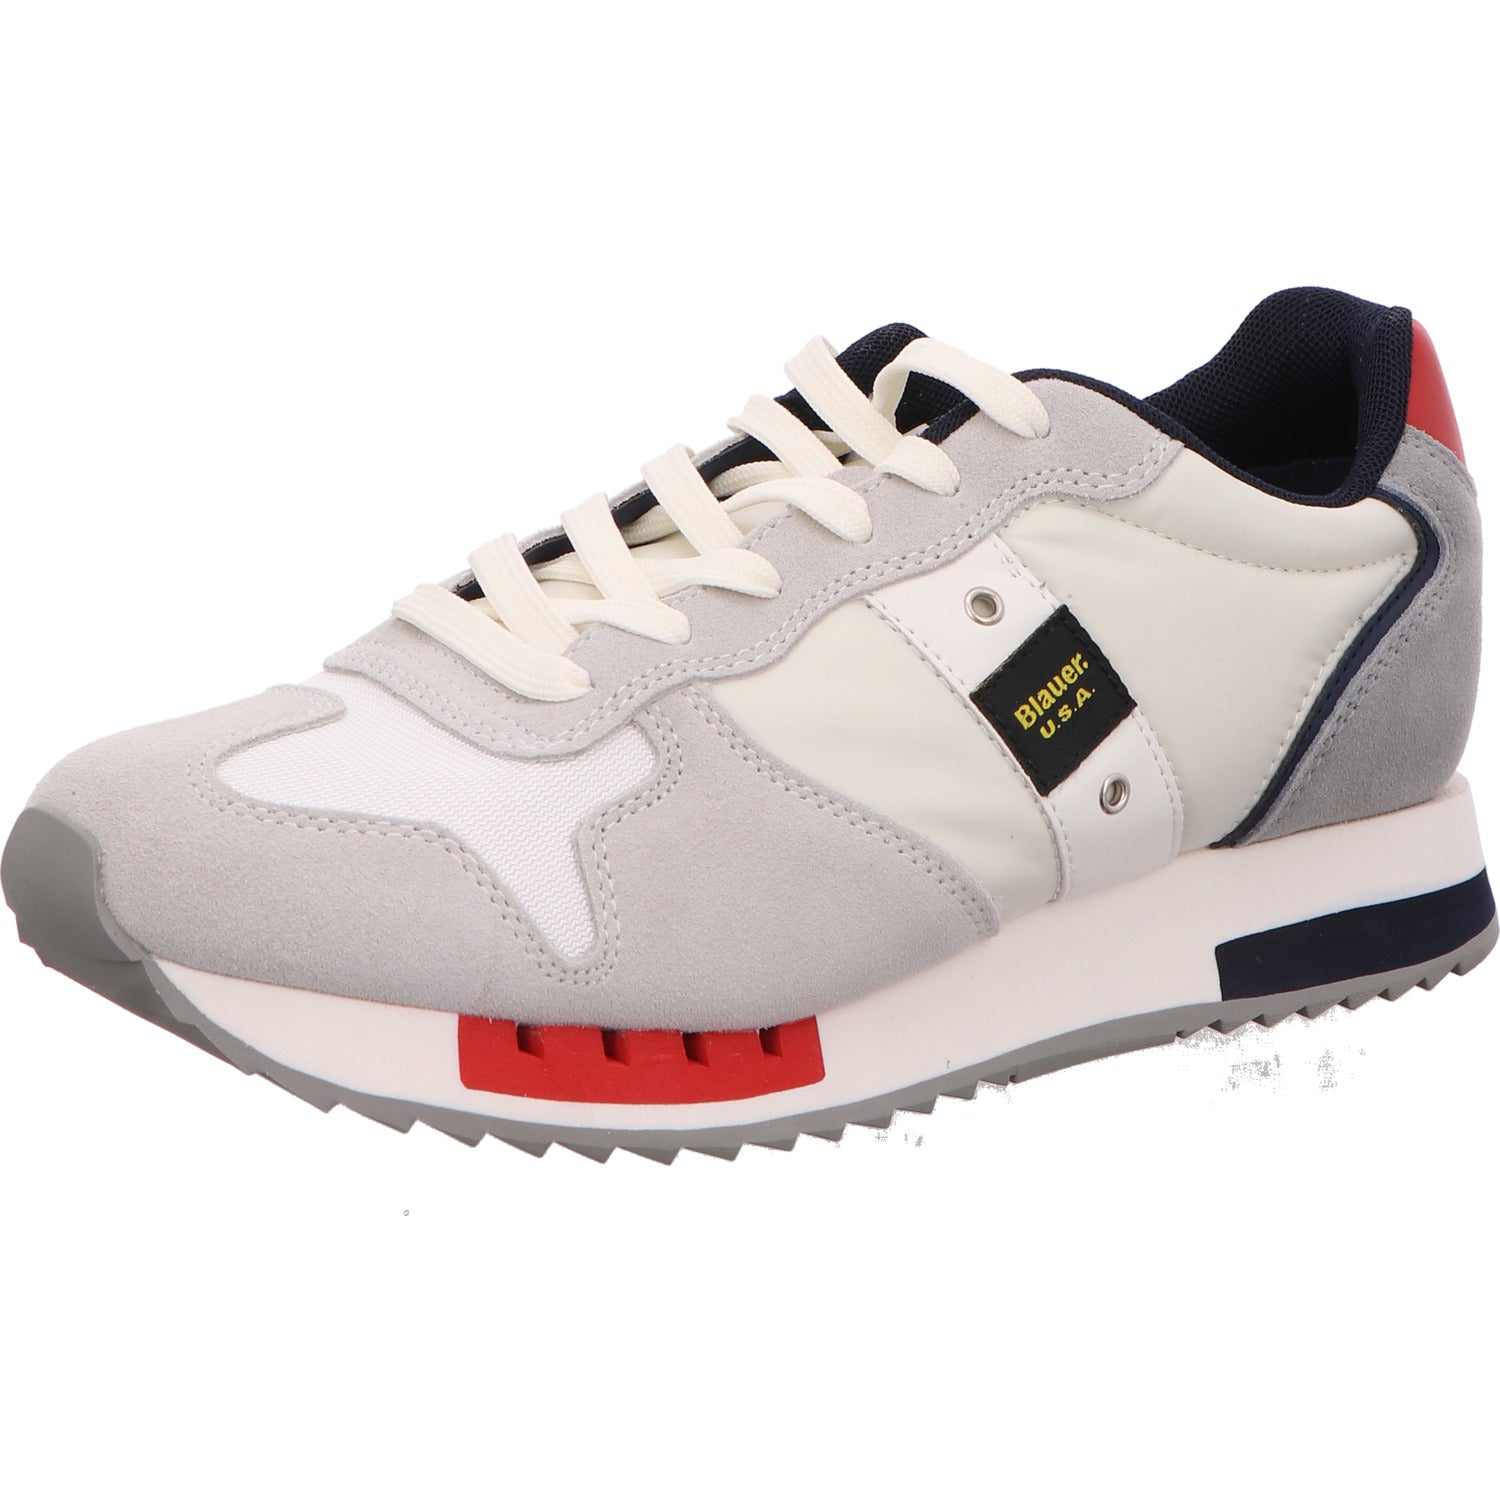 neu-blauer-shoes-herren-sneaker-in-white-red-navy-aus-leder-synth-textil-kombiniert-1